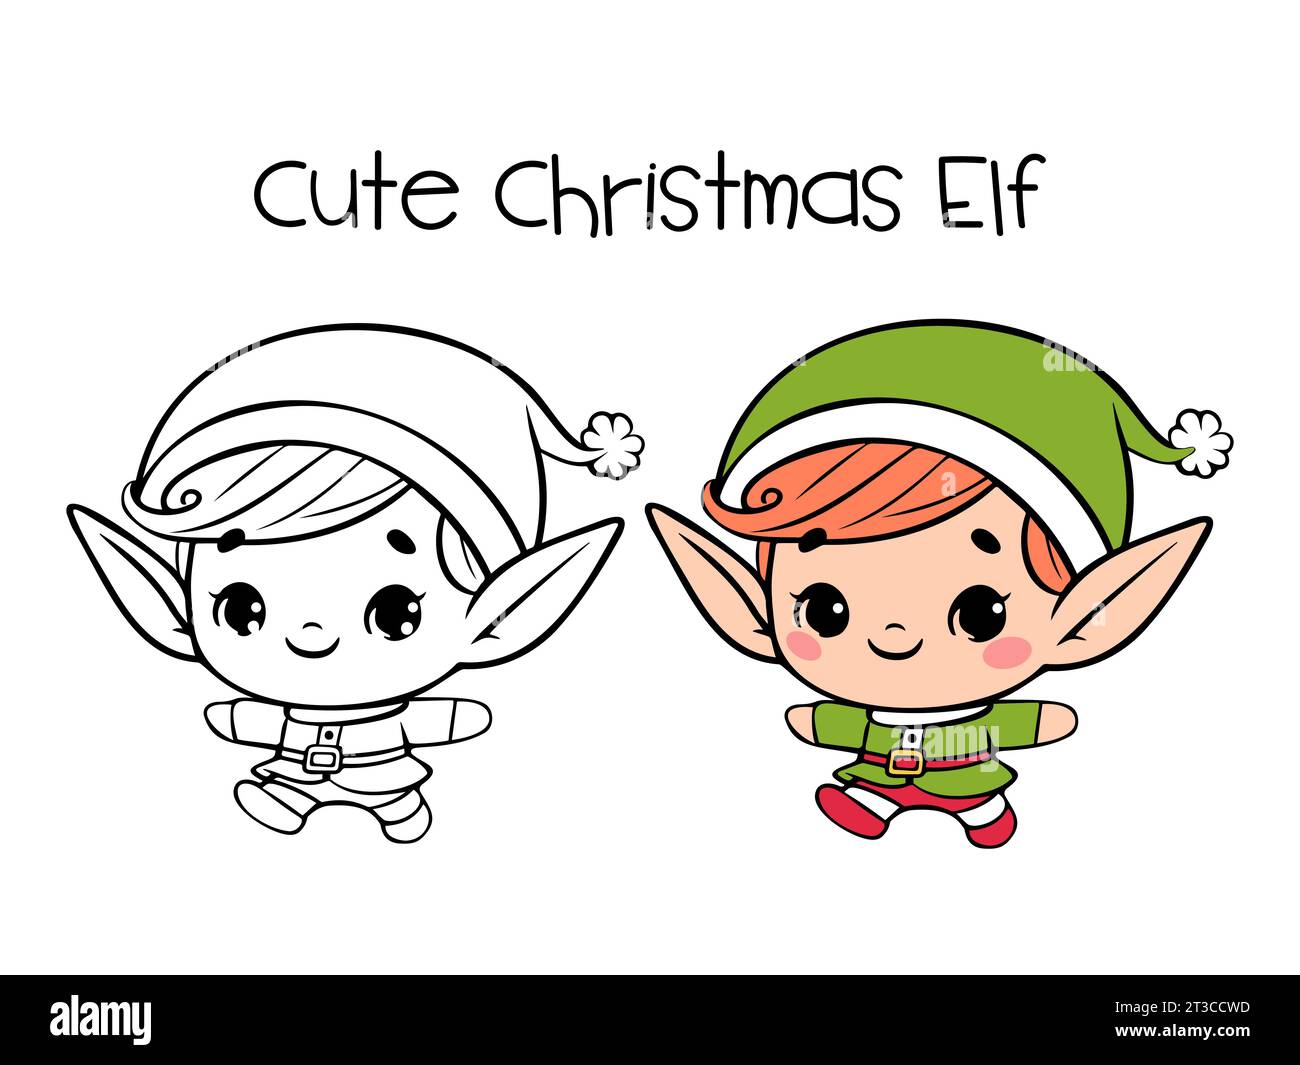 How to Draw an elf by step  Elf drawings, Cute doodles drawings